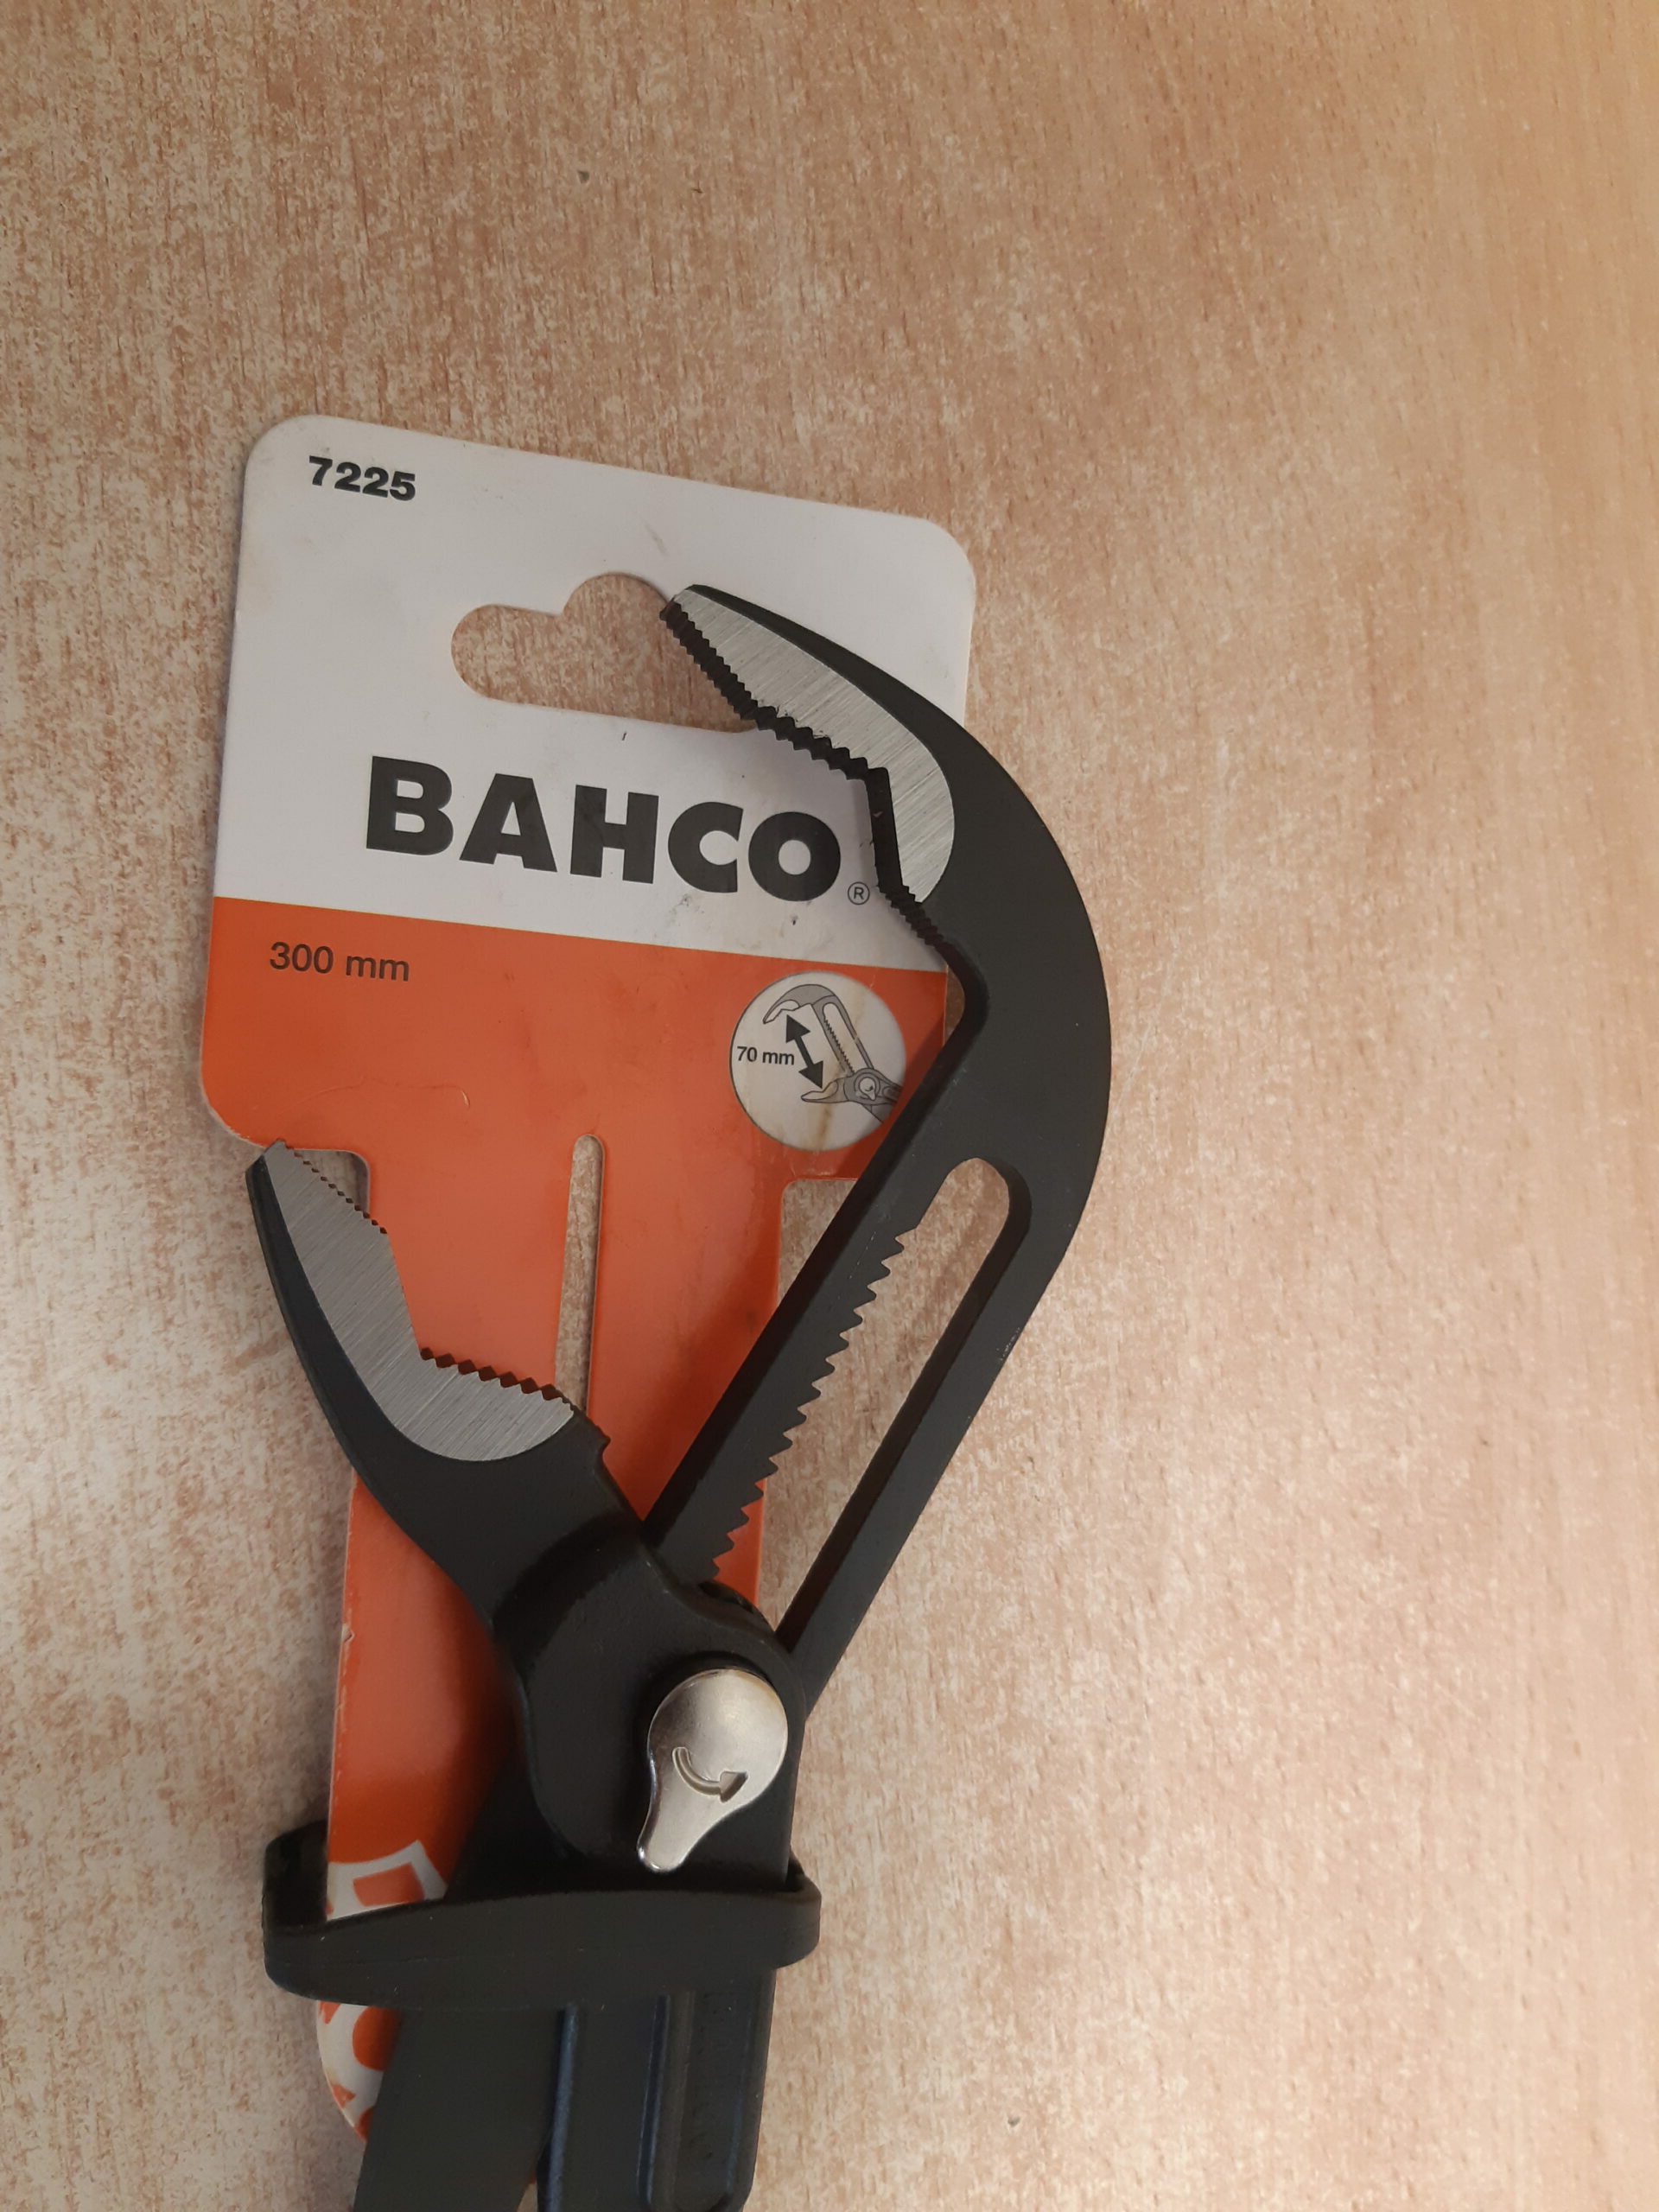 Tools24 - tangid Bahco 7225-2